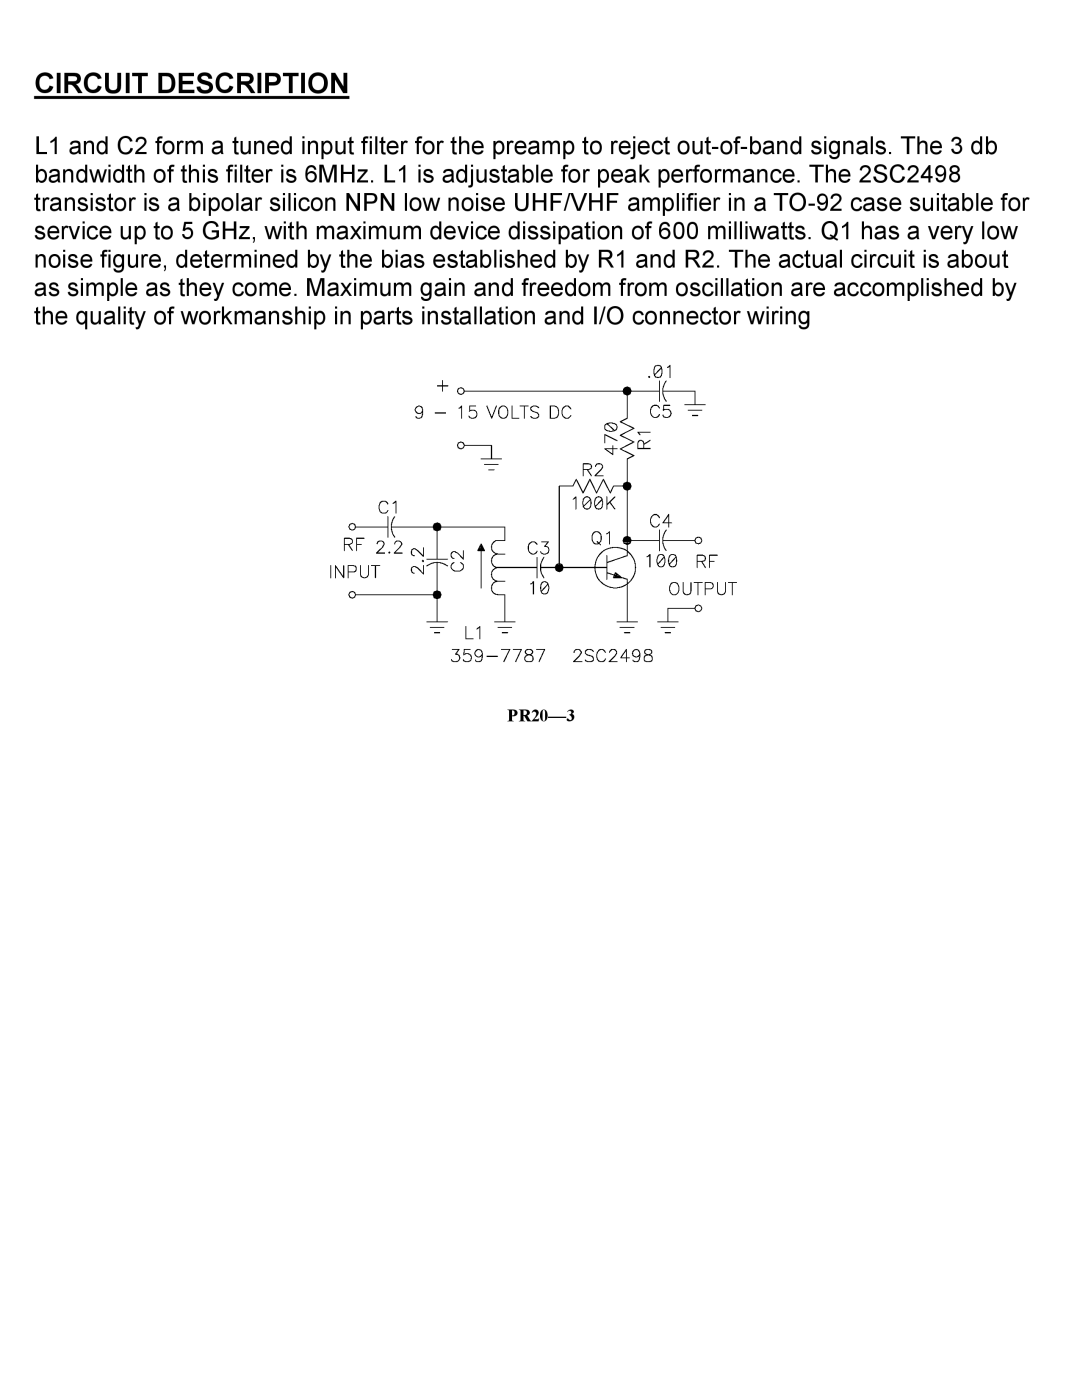 Ramsey Electronics manual Circuit Description, PR20-3 